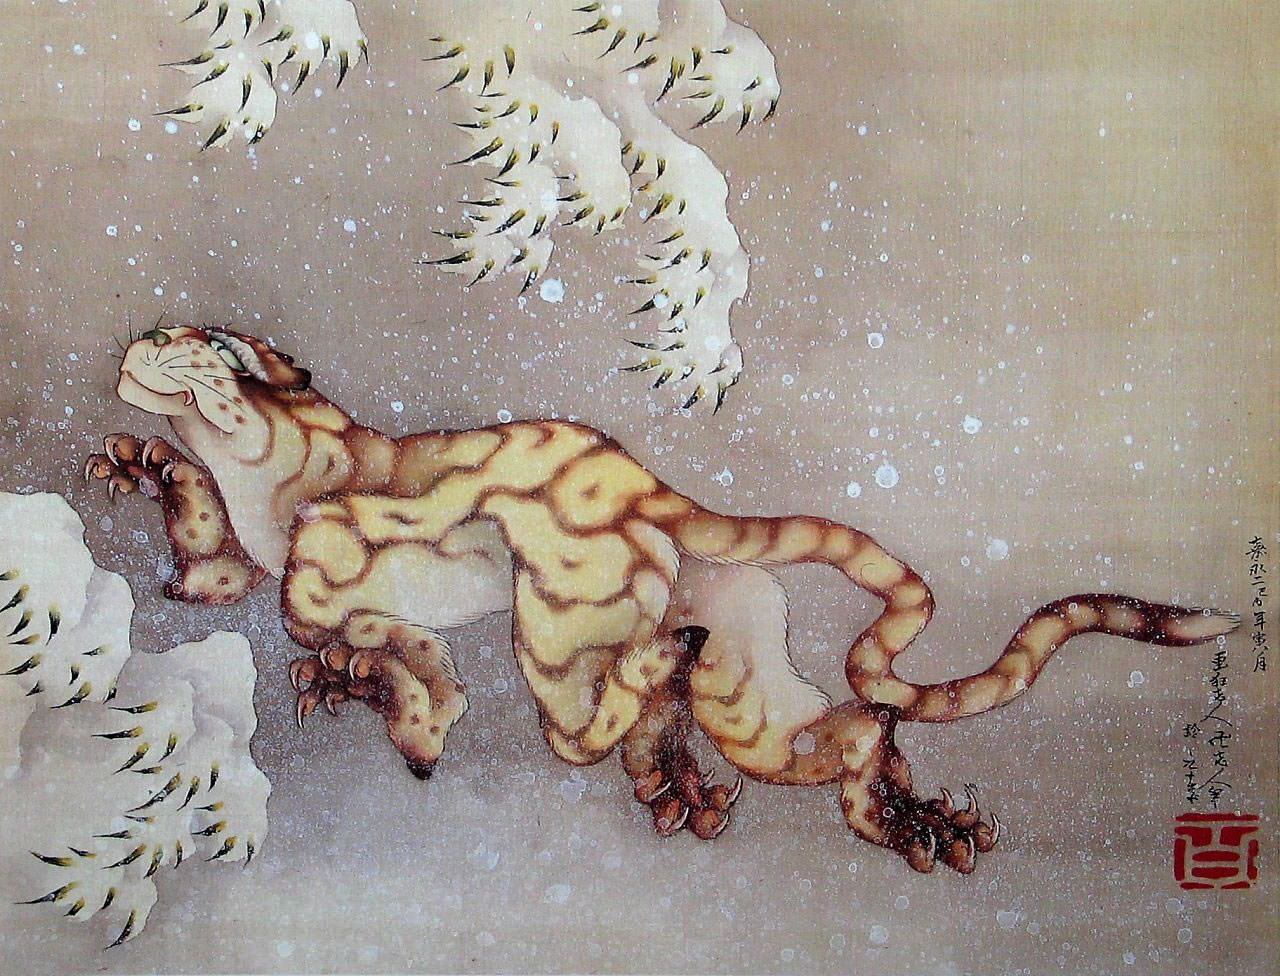 Tiger im Schnee by Katsushika Hokusai - 1849 Private Sammlung